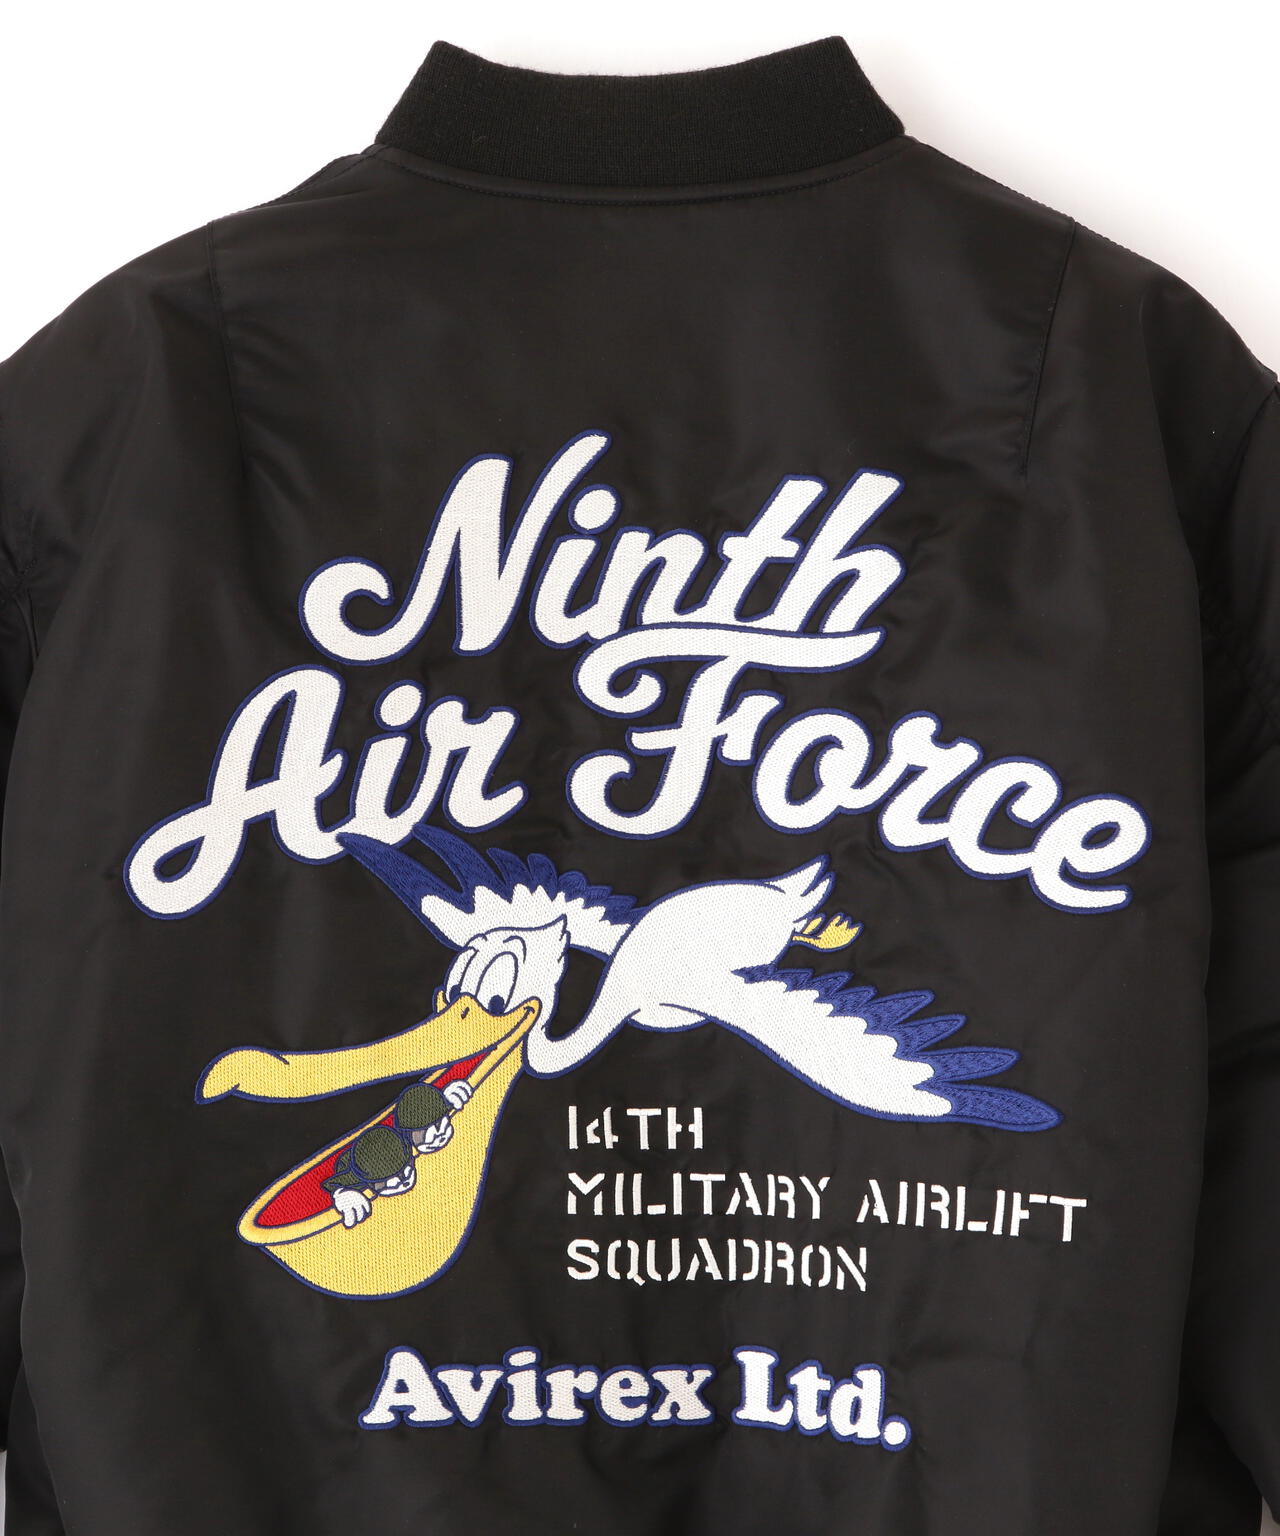 MA-1 9th AIR FORCE/MA-1 9th エアフォース